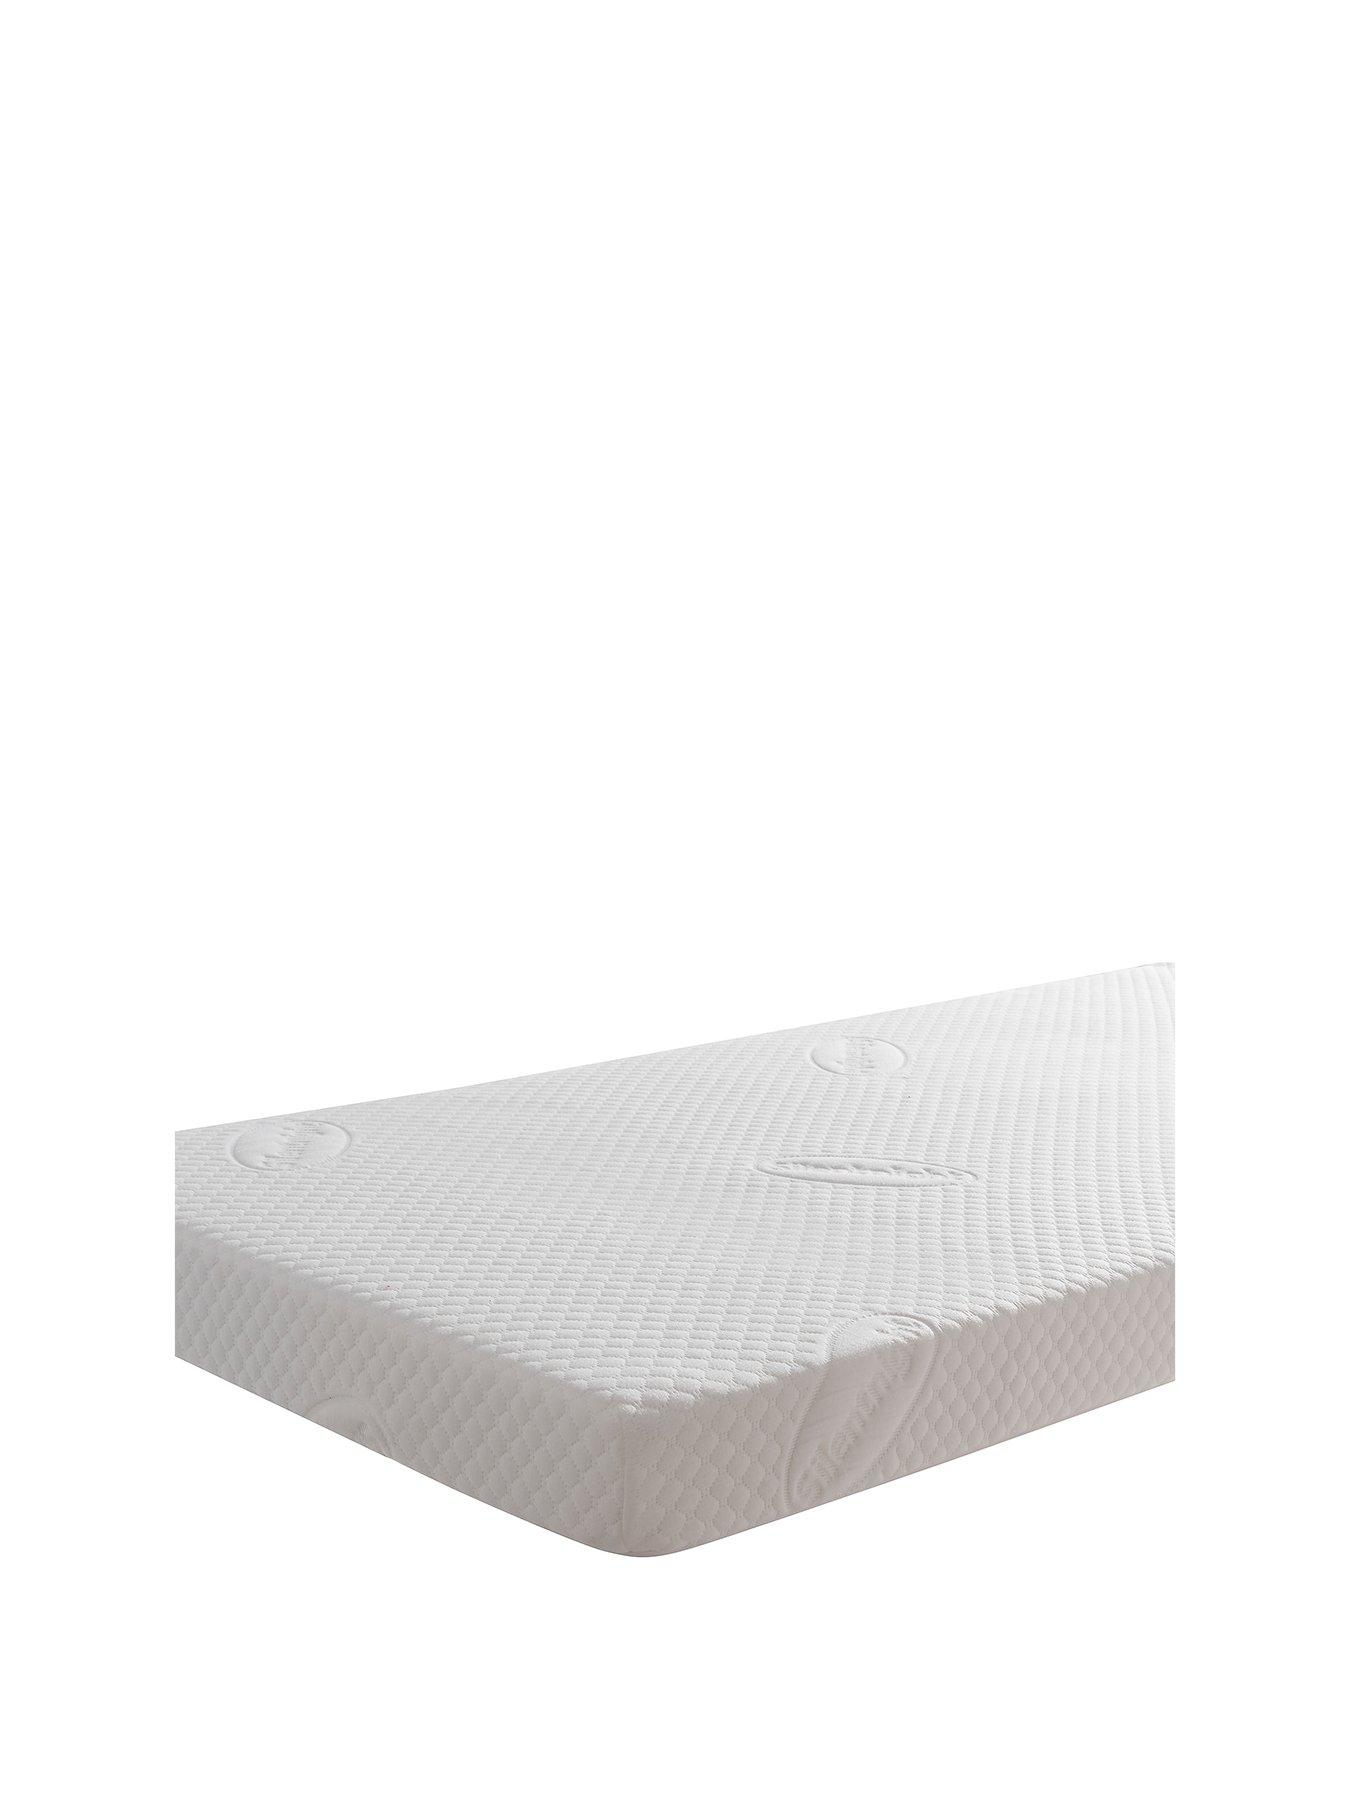 cot bed mattress uk